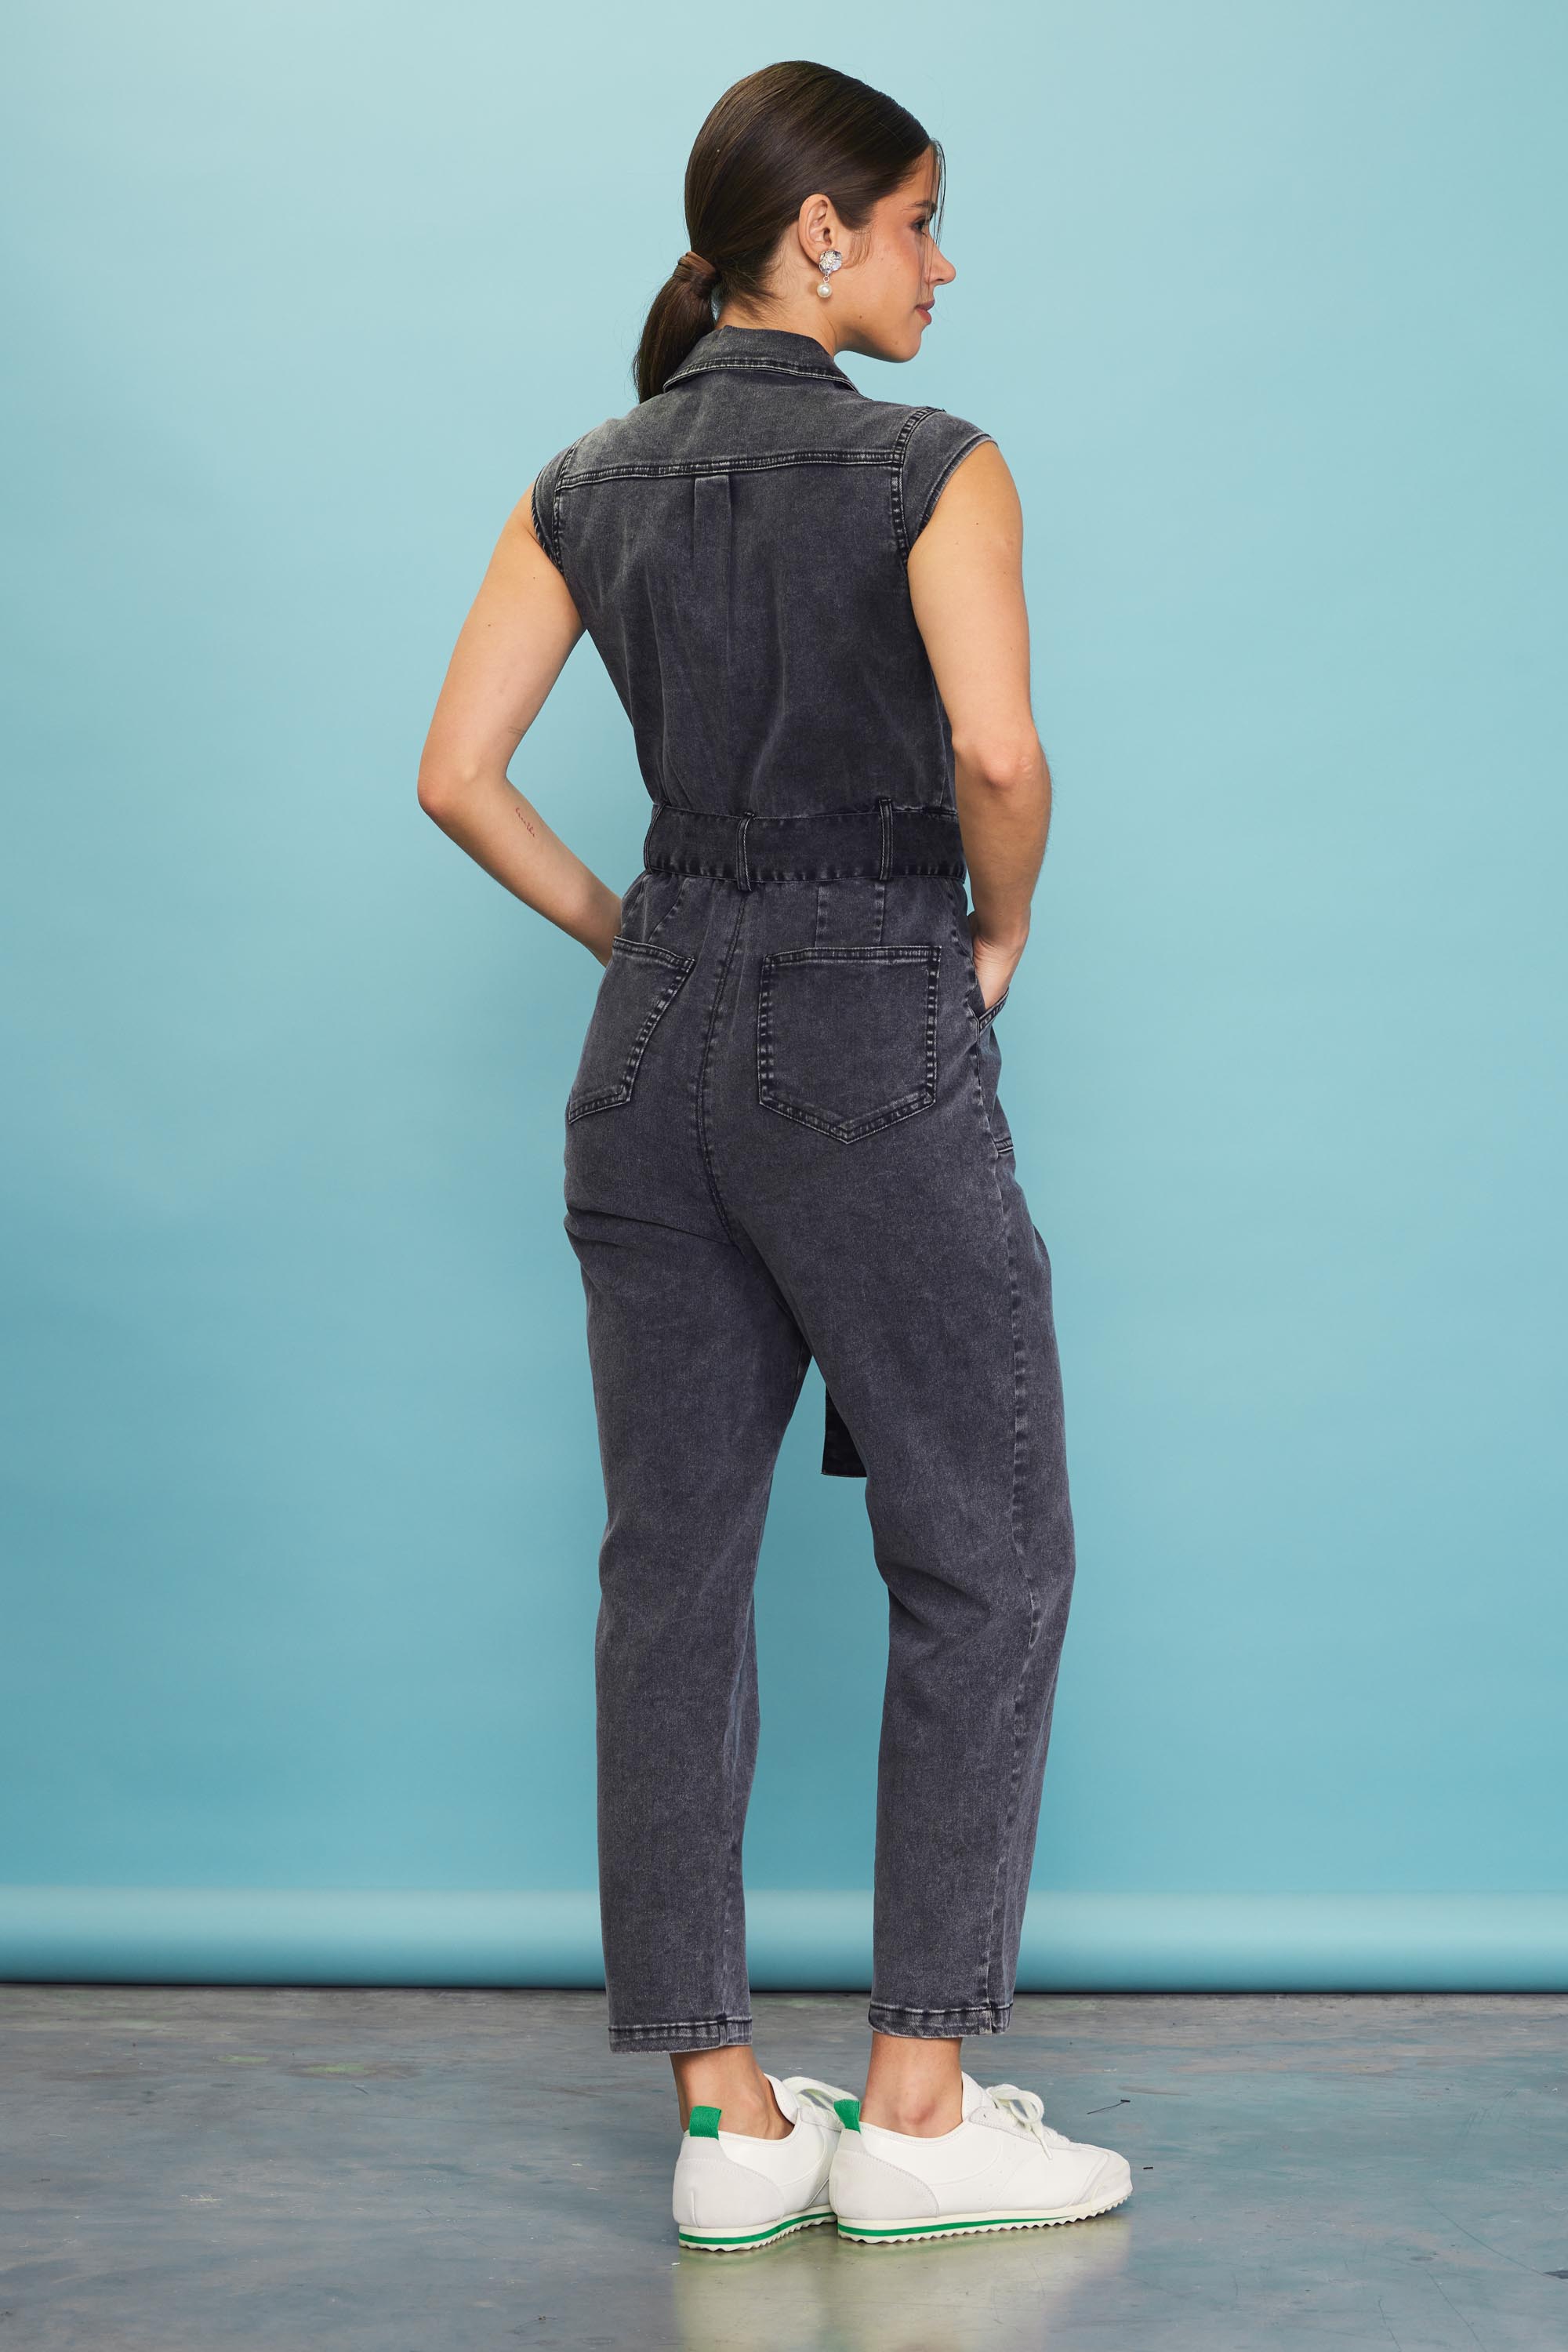 New Stylish Women Sleeveless Button Hollow Out Patchwork Club Denim Jumpsuit  | eBay